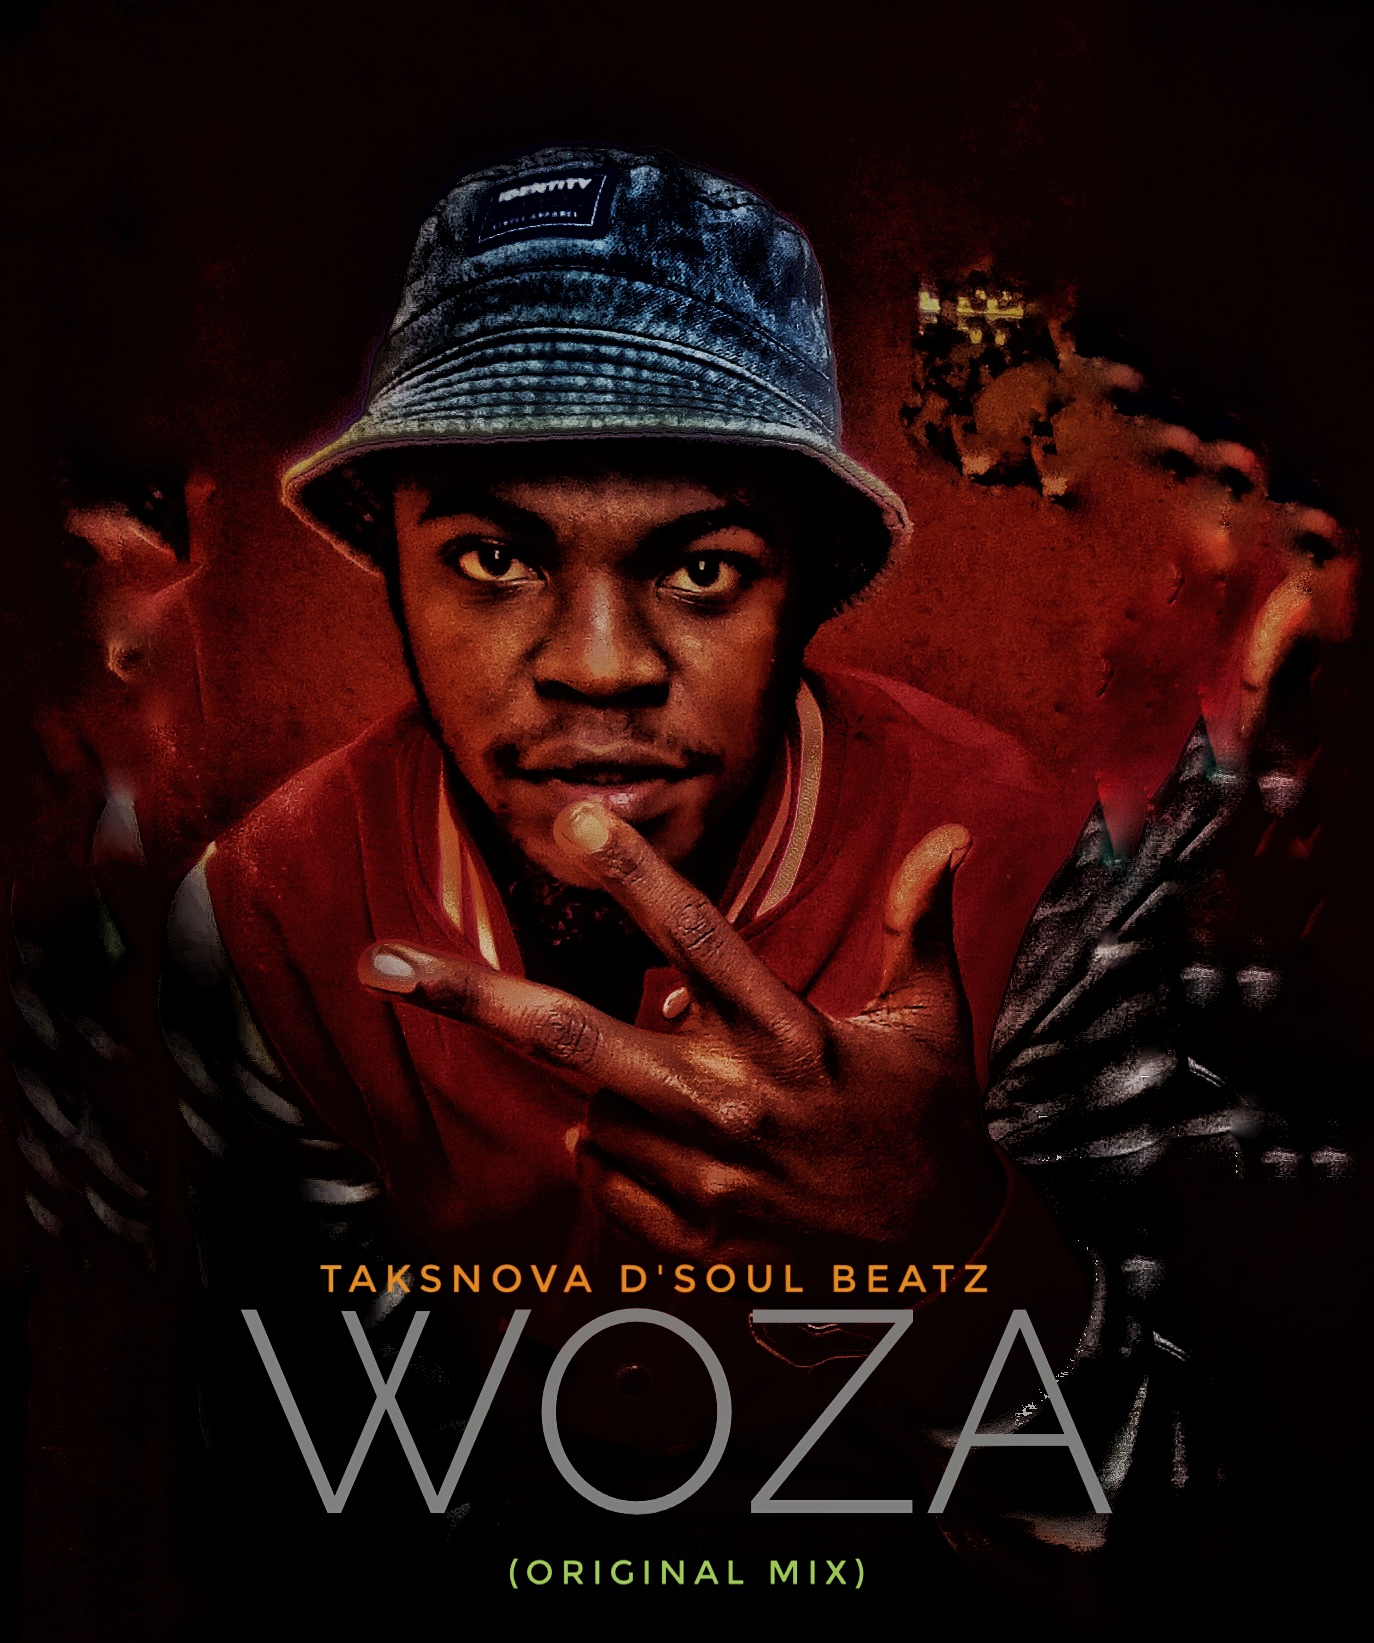 Woza (original mix) - Taksnova D'soul Beatz